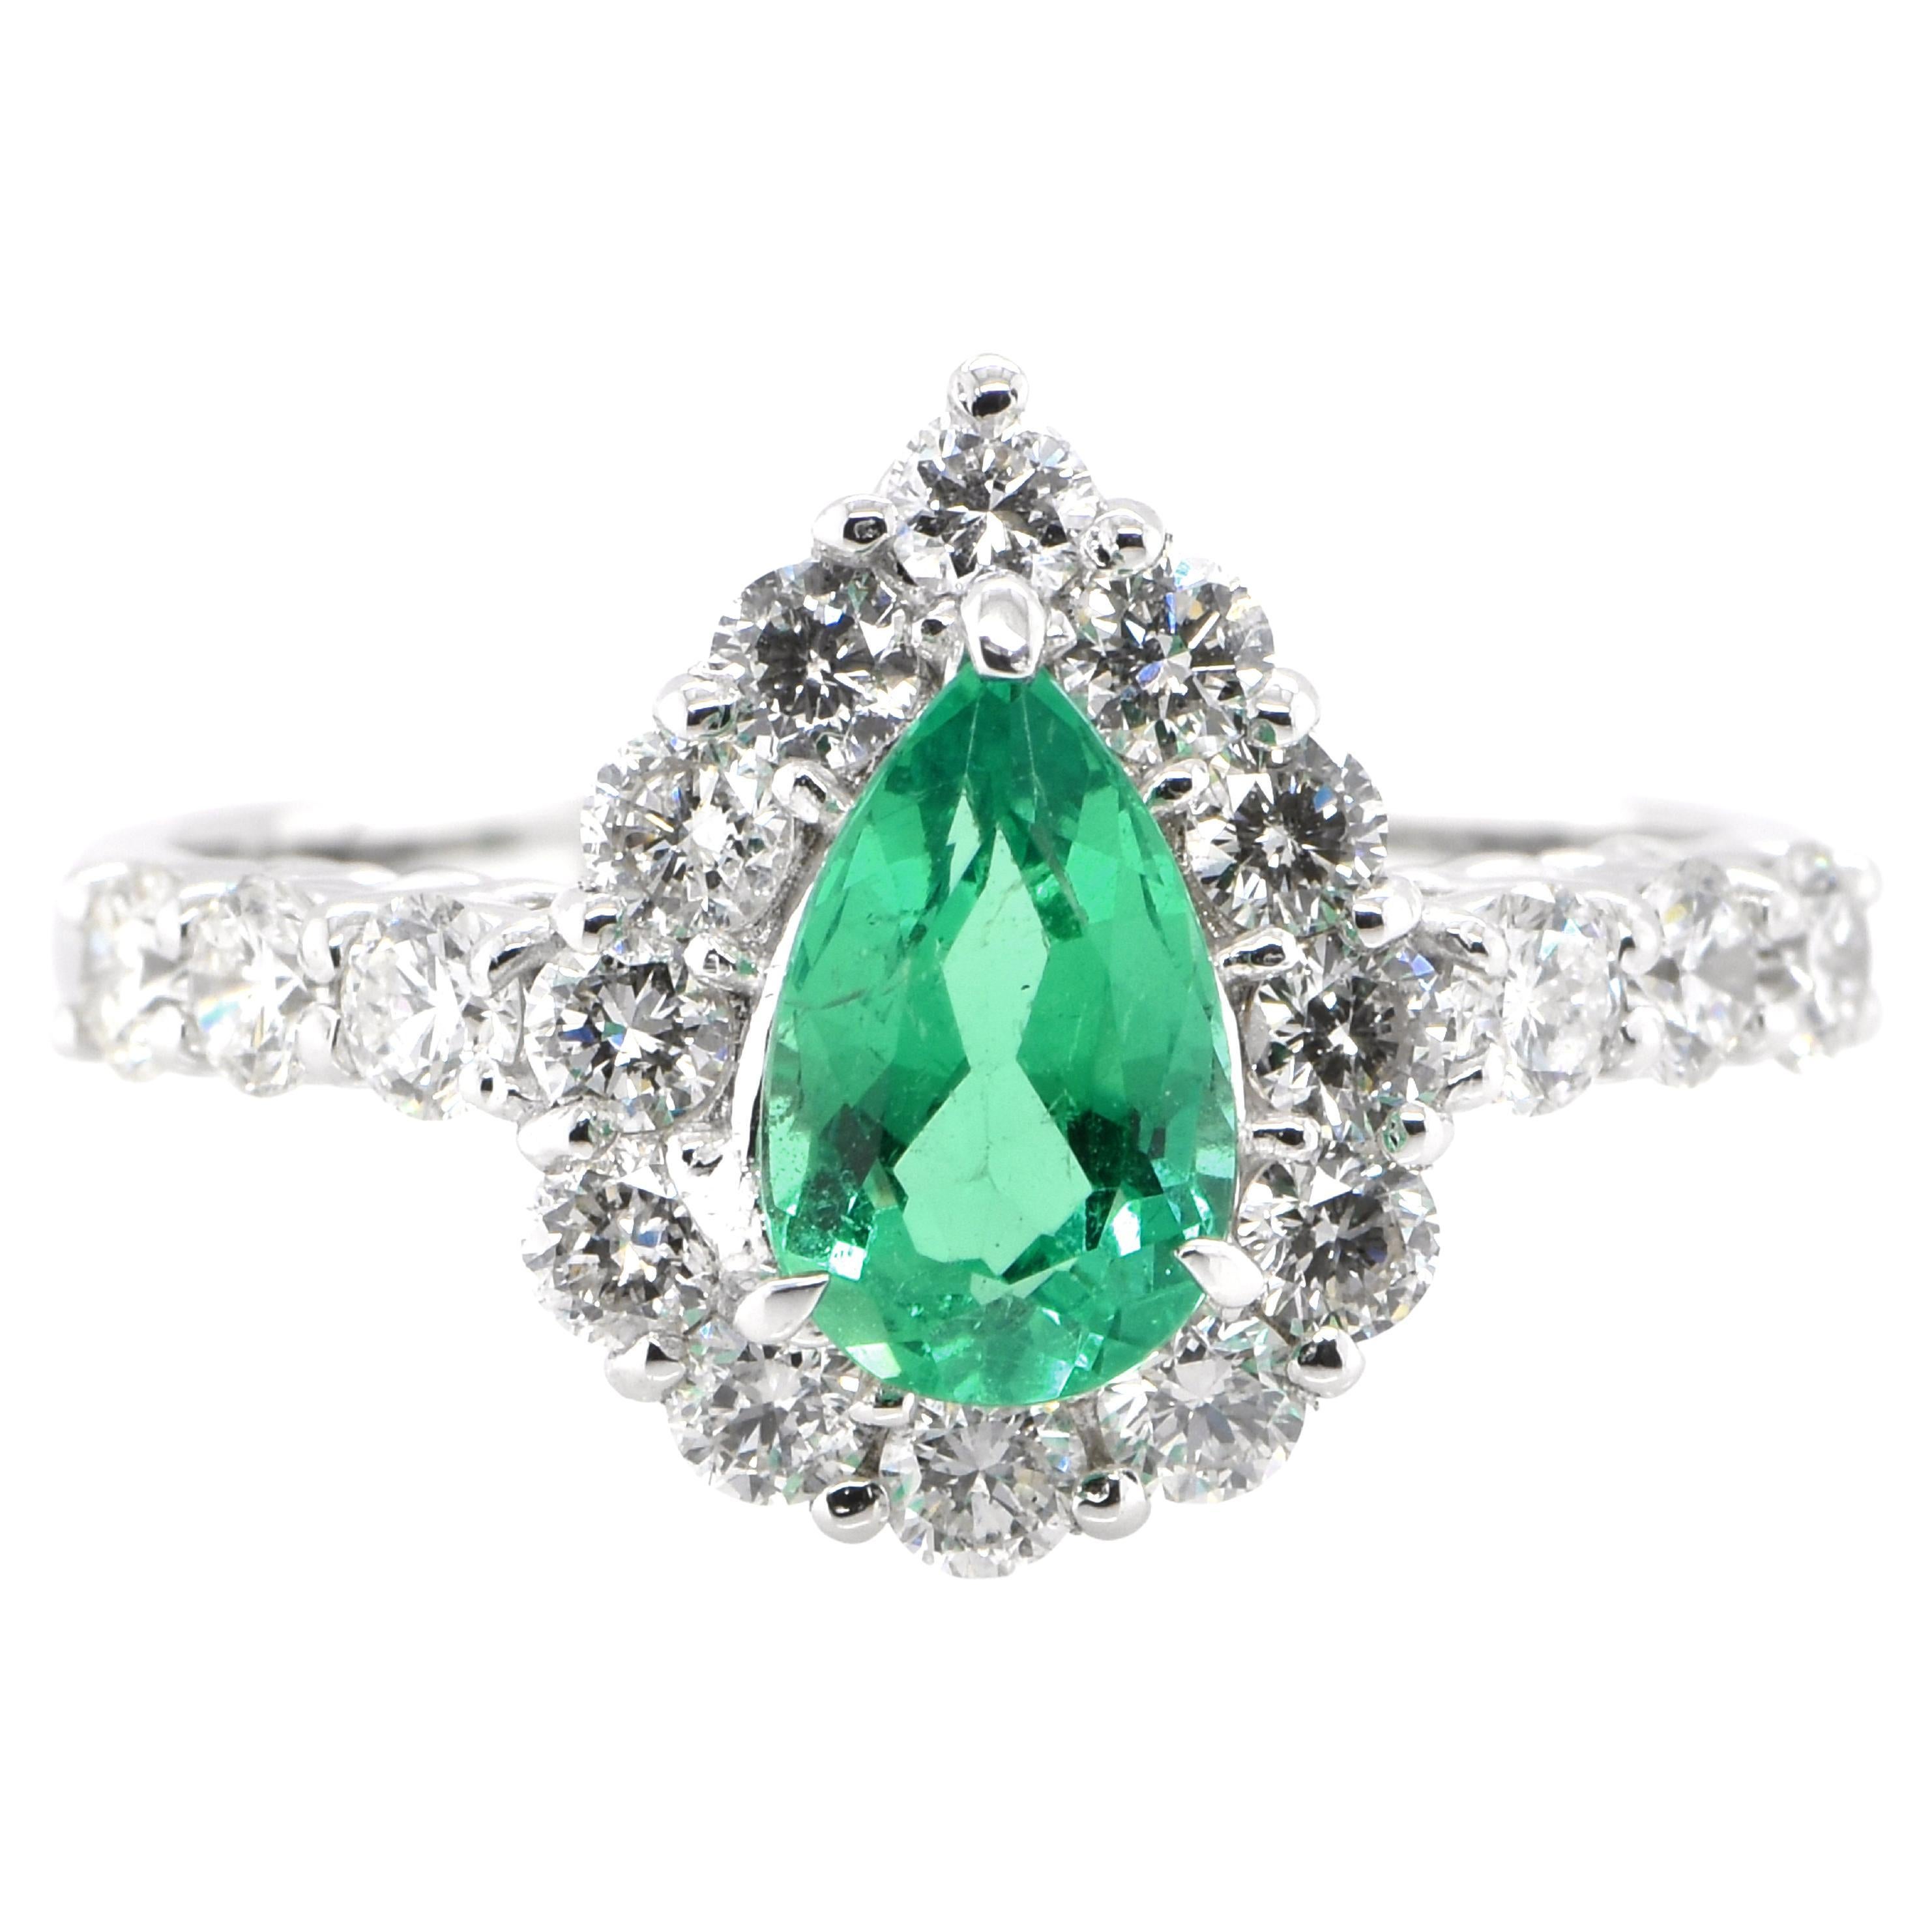 0.75 Carat Natural Pear-Cut Emerald and Diamond Halo Ring Set in Platinum